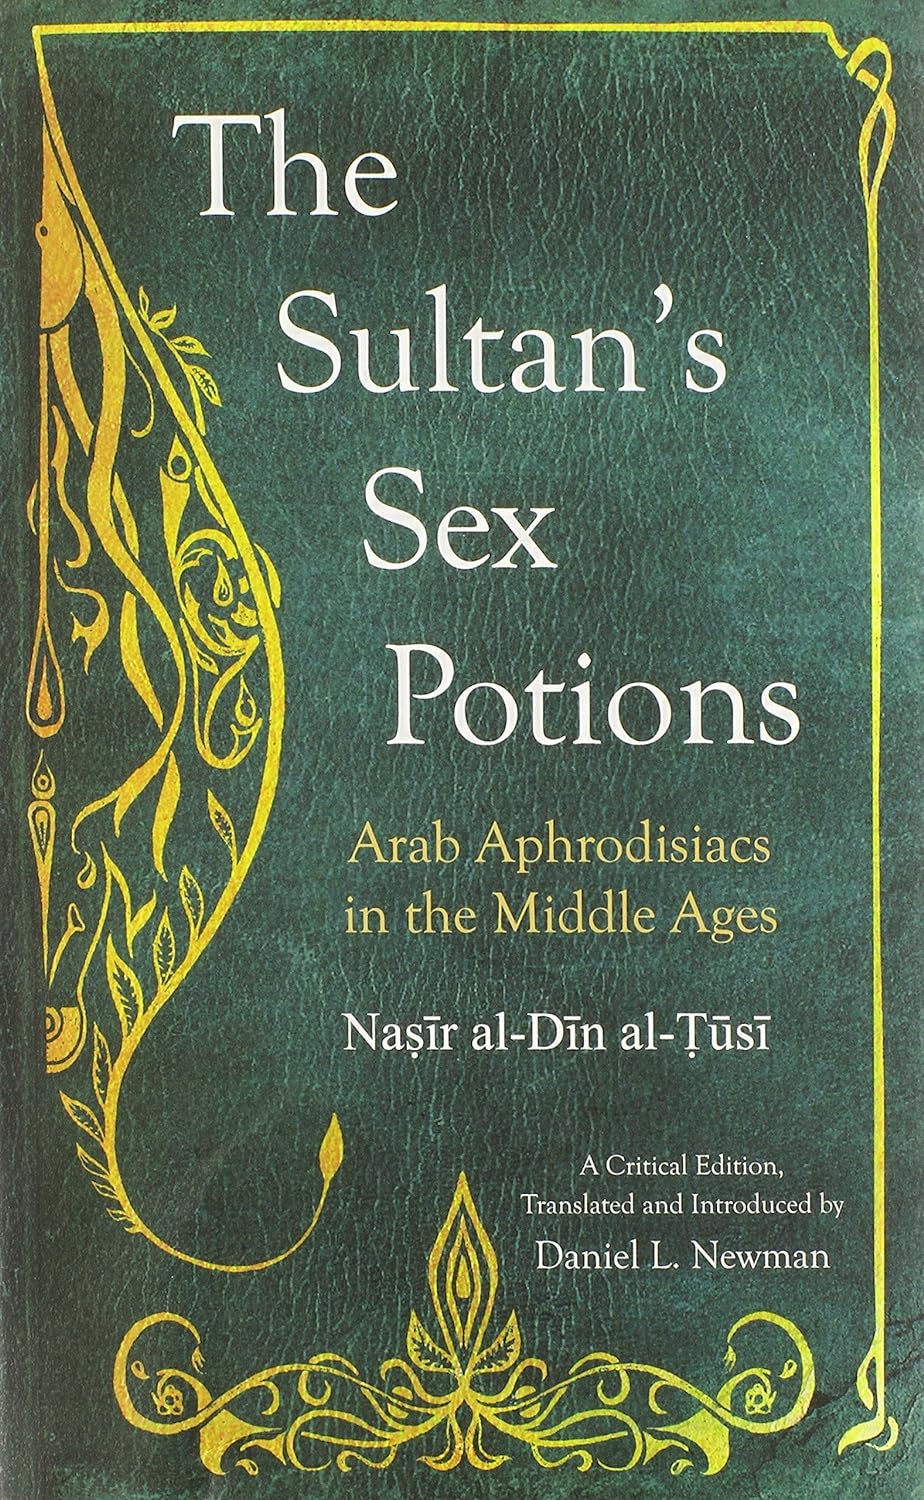 The Sultan’s Sex Potions: Arab Aphrodisiacs in the Middle Ages الباب الباهية والتراكيب السلطانية